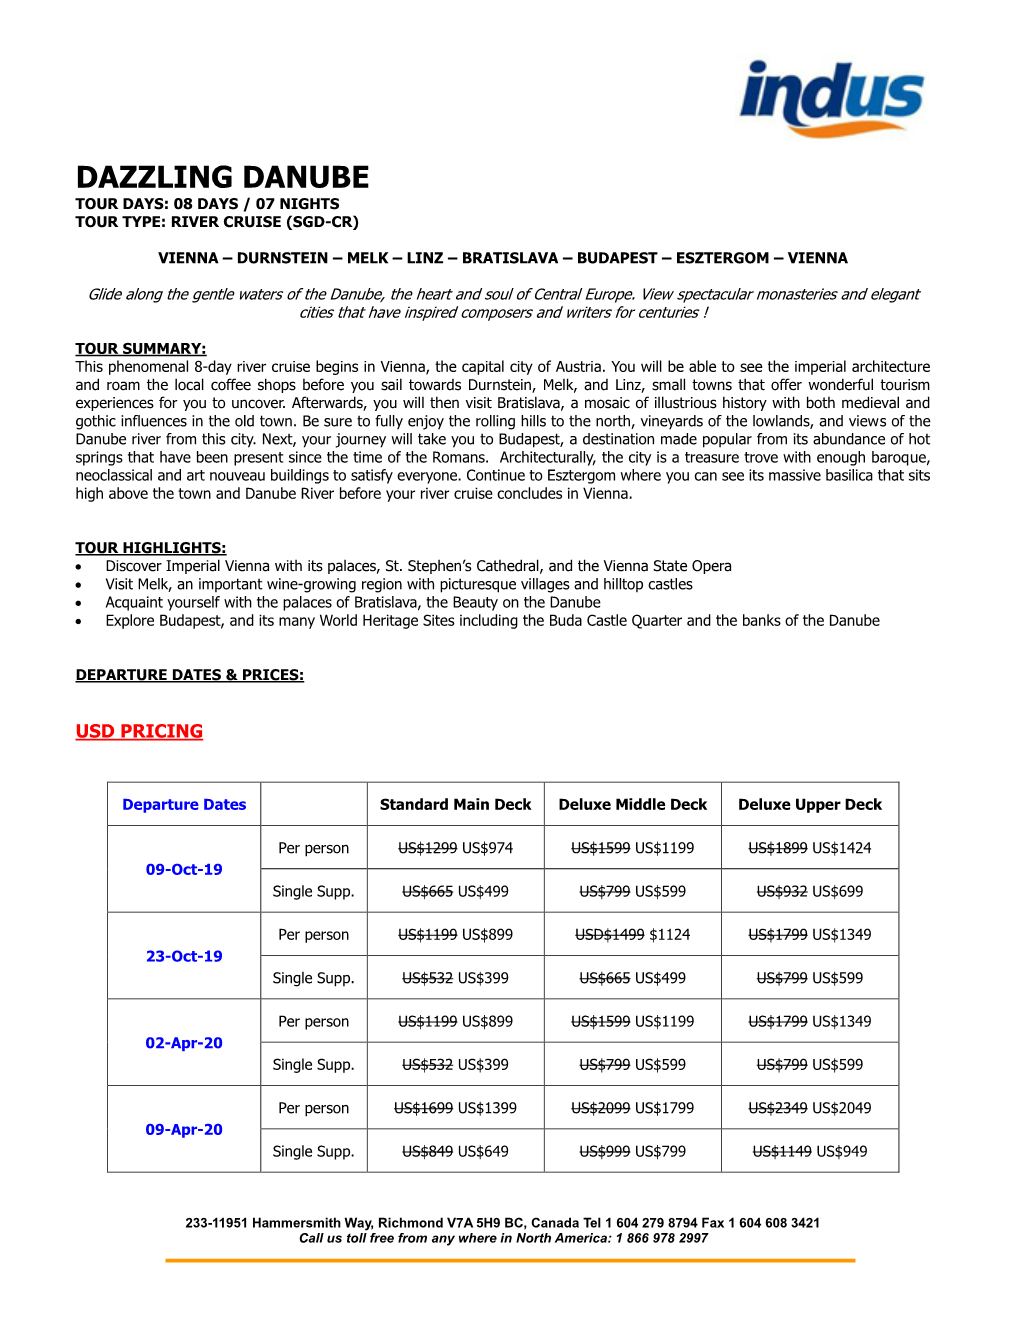 Dazzling Danube Tour Days: 08 Days / 07 Nights Tour Type: River Cruise (Sgd-Cr)